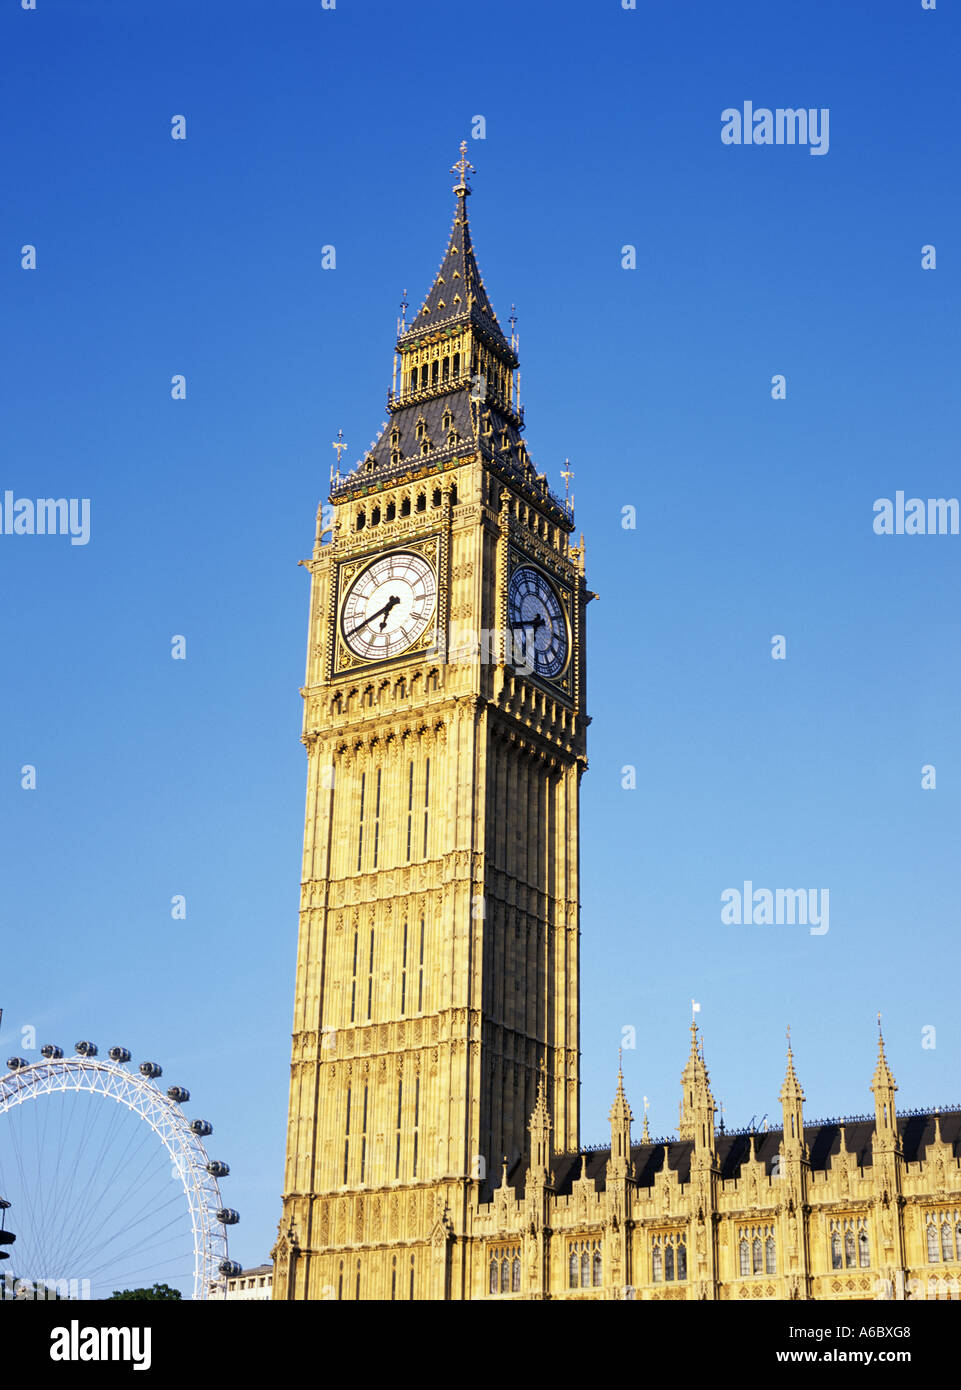 Big Ben Clock Tower in Westminster London Stock Photo